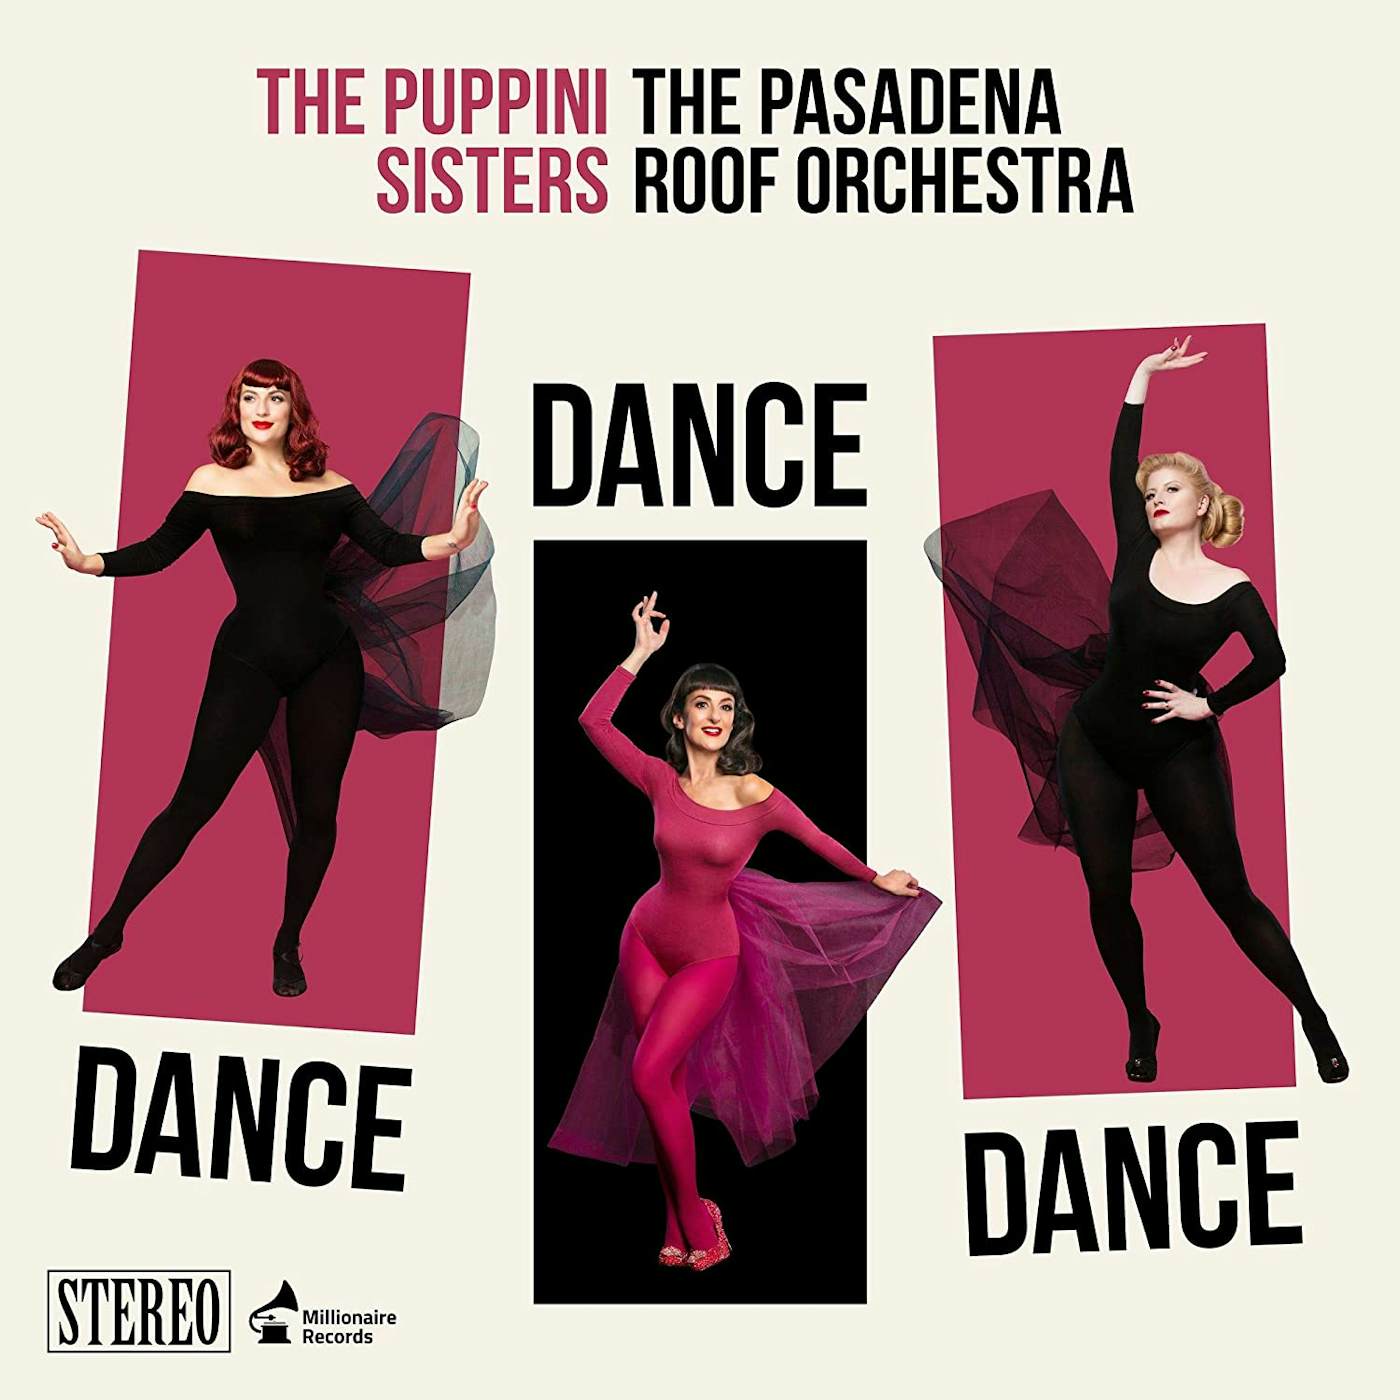 The Puppini Sisters Dance, Dance, Dance Vinyl Record